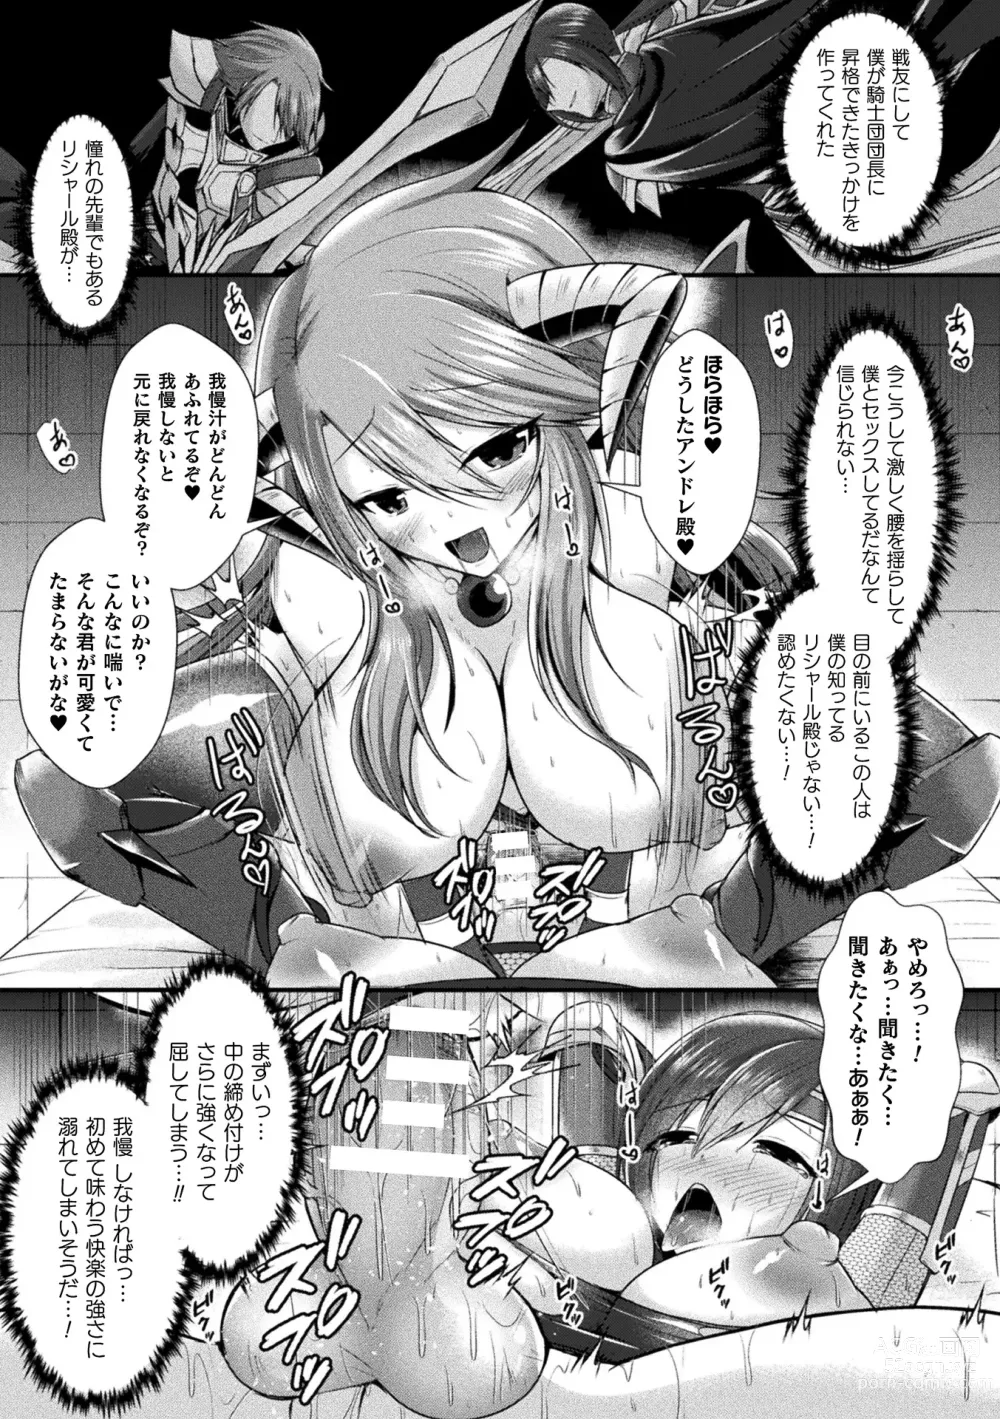 Page 21 of manga Kairaku Dain Desespoir